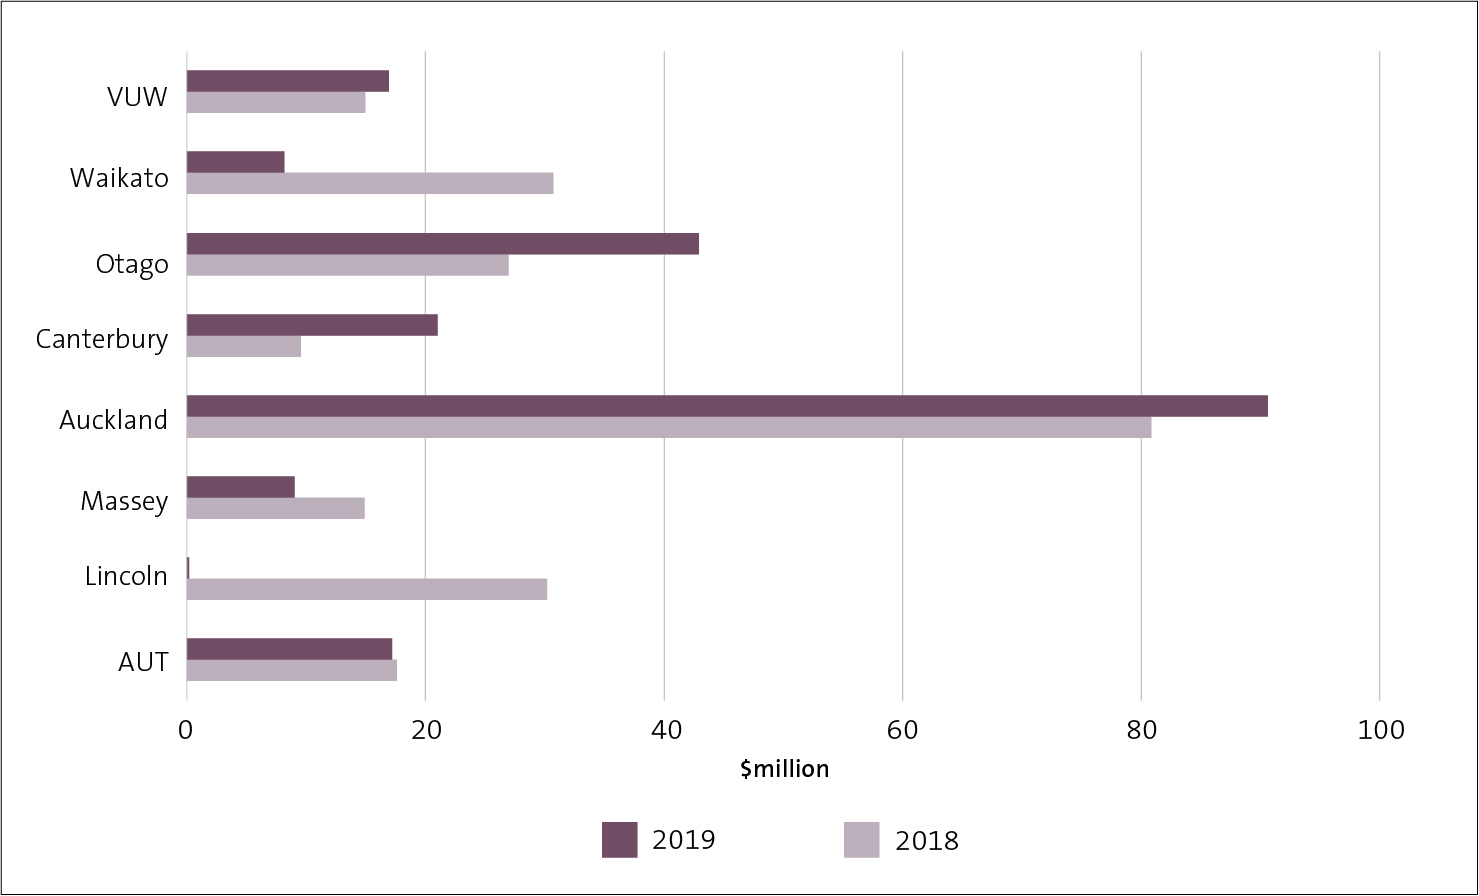 Figure 2 - Total university surpluses, 2018 and 2019